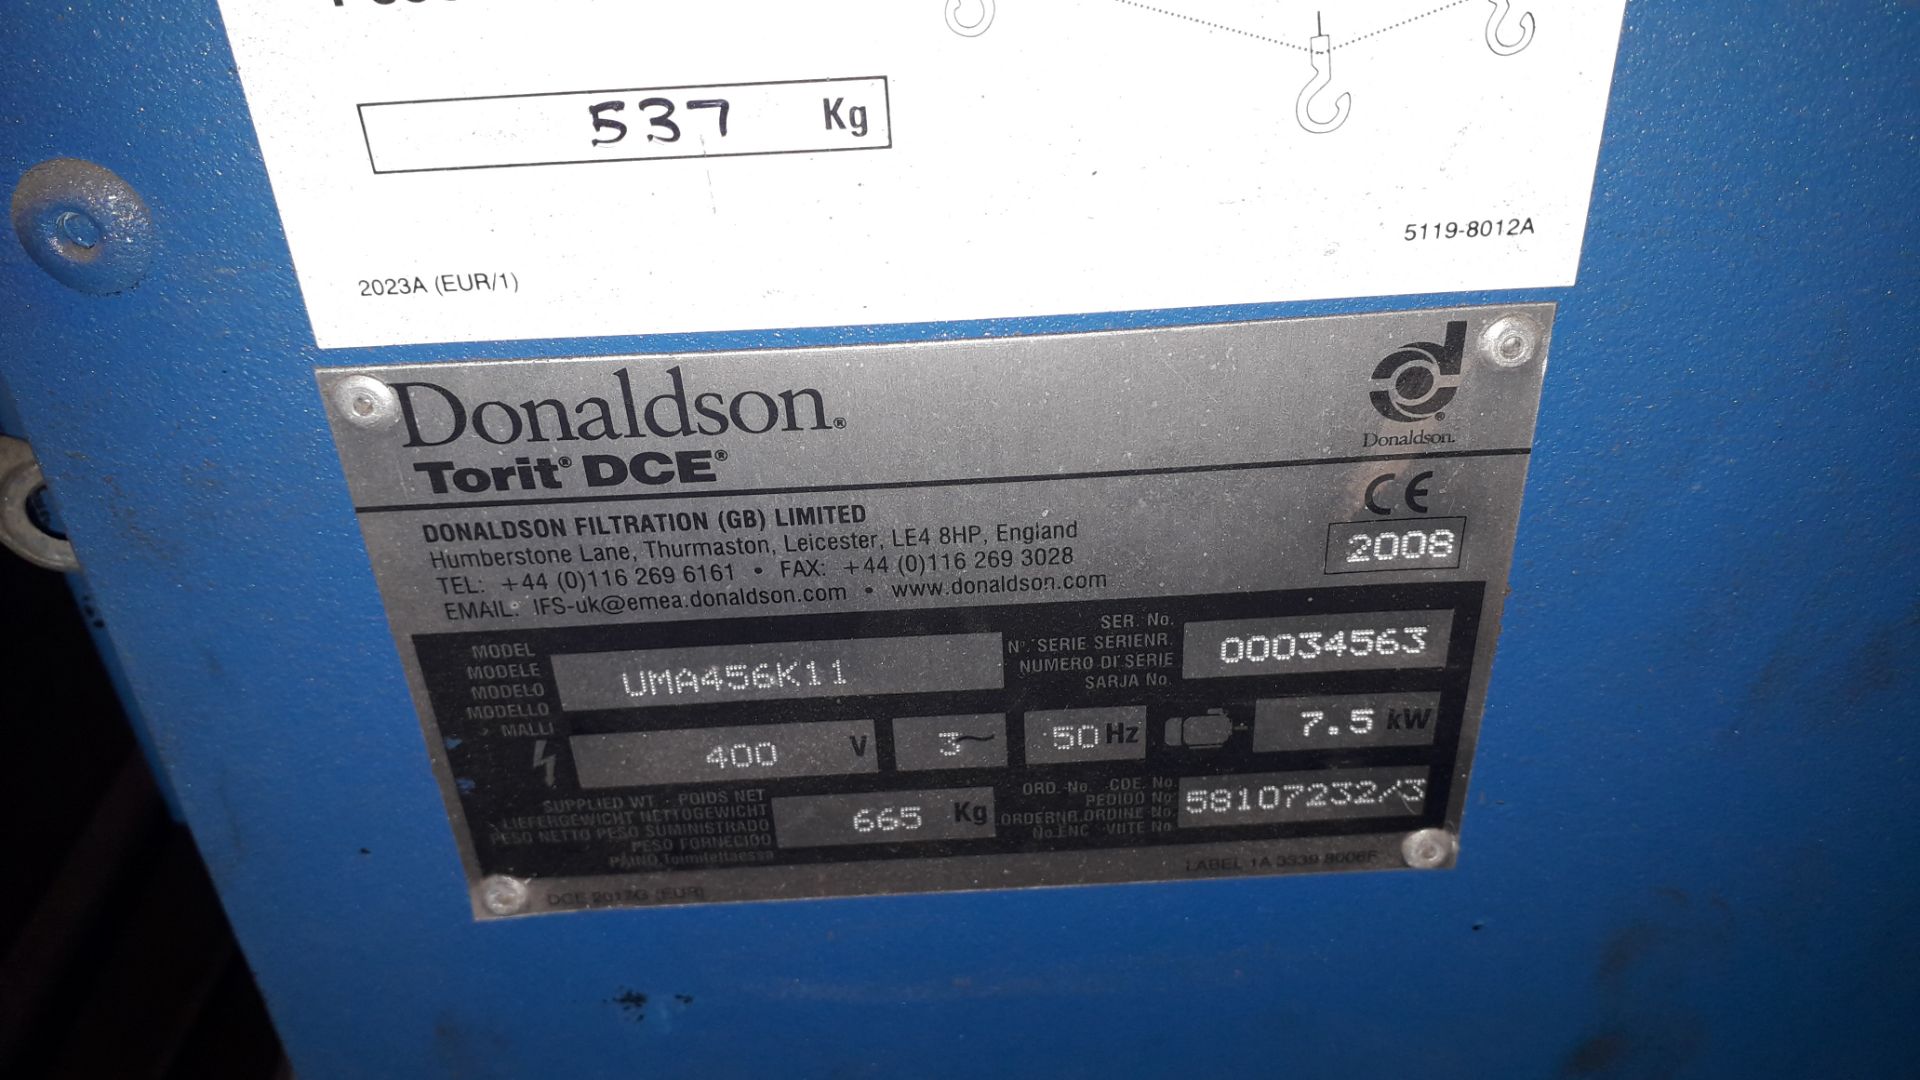 Donaldson Torit DCE UMA456K11 Dust Extraction Unit (2008) Serial Number 00034563 - 400v Approx 600kg - Image 2 of 8